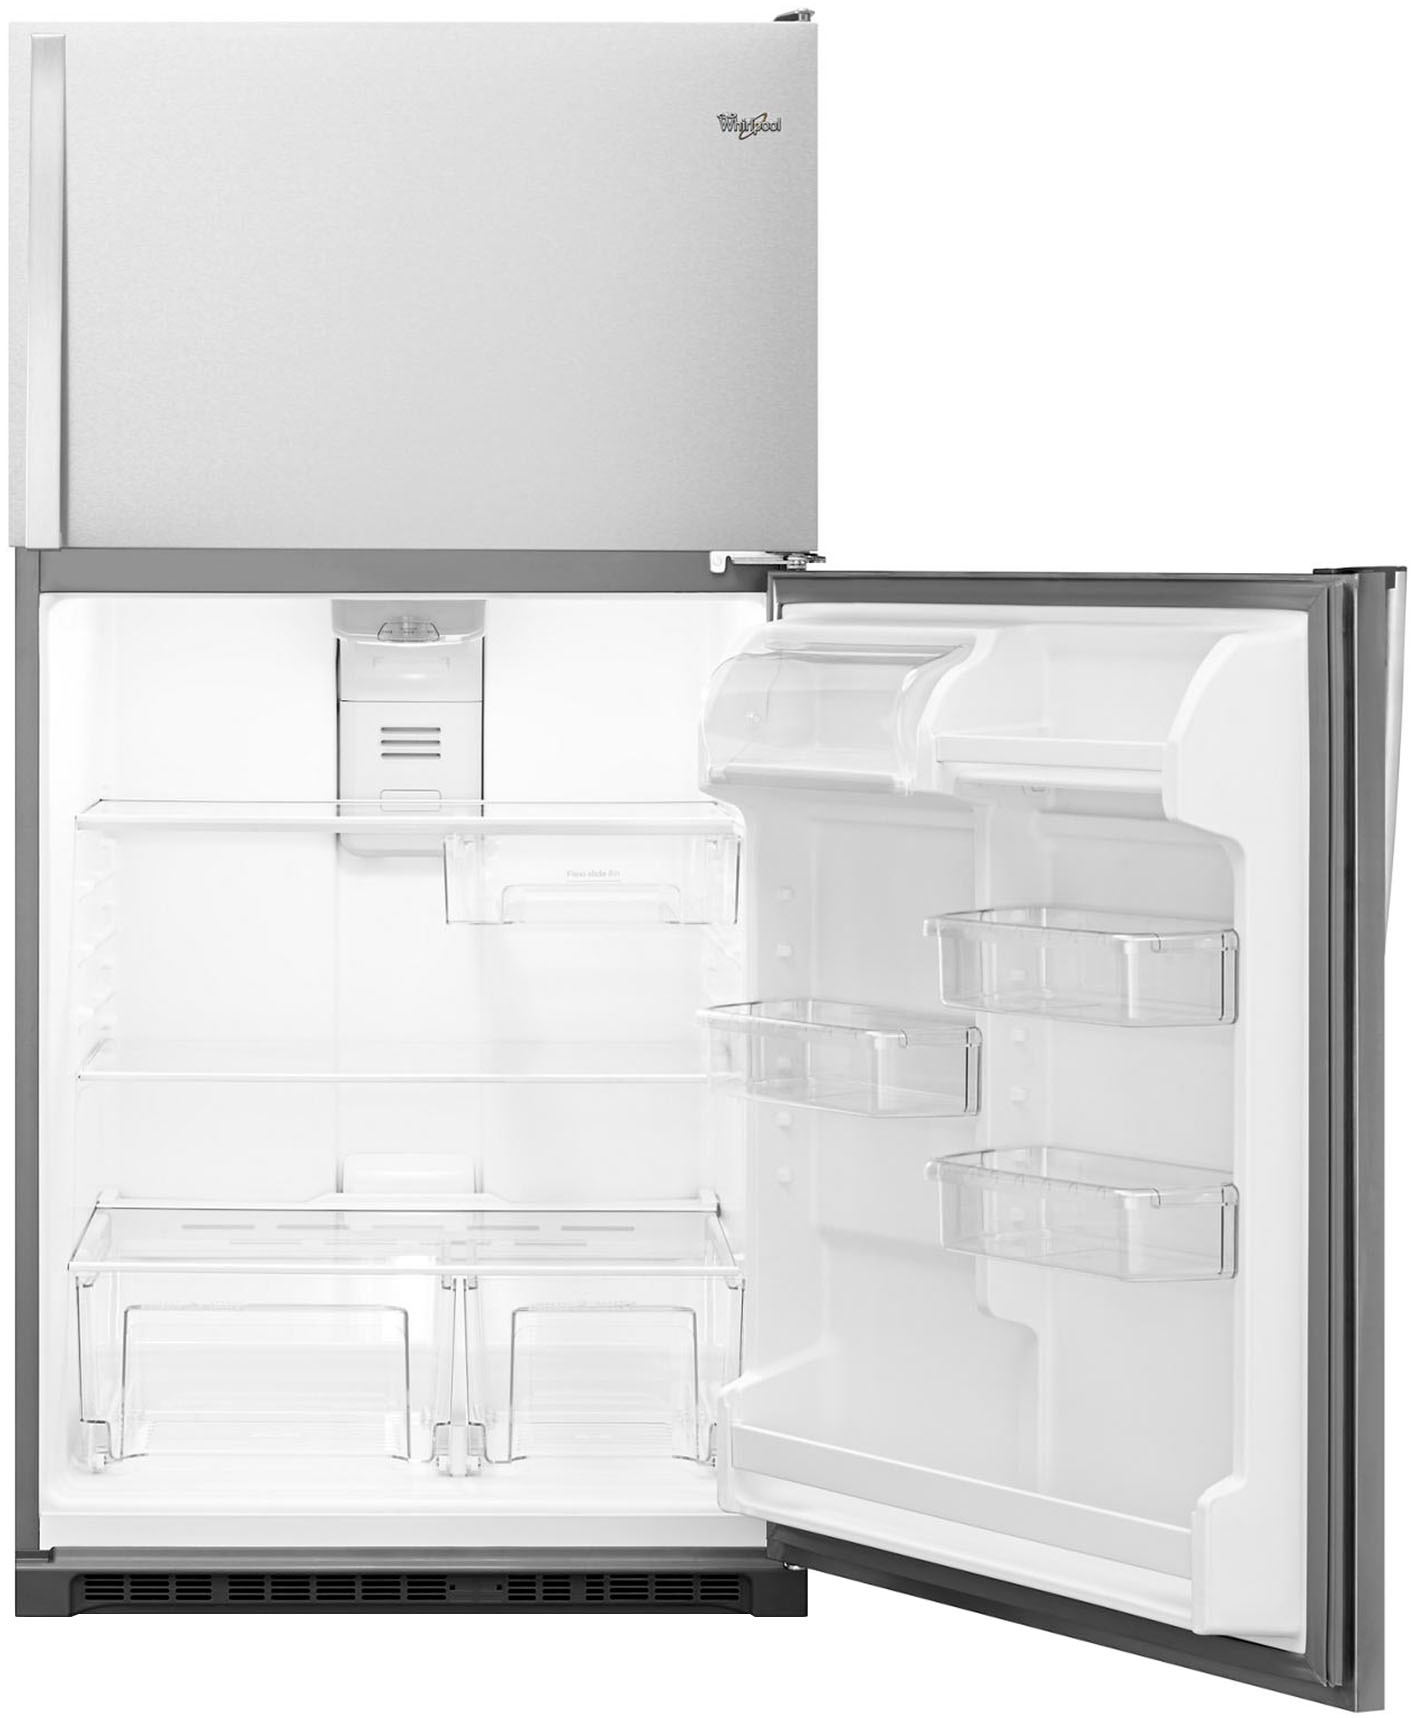 Whirlpool - 20.5 Cu. Ft. Top-Freezer Refrigerator - Monochromatic Stainless Steel